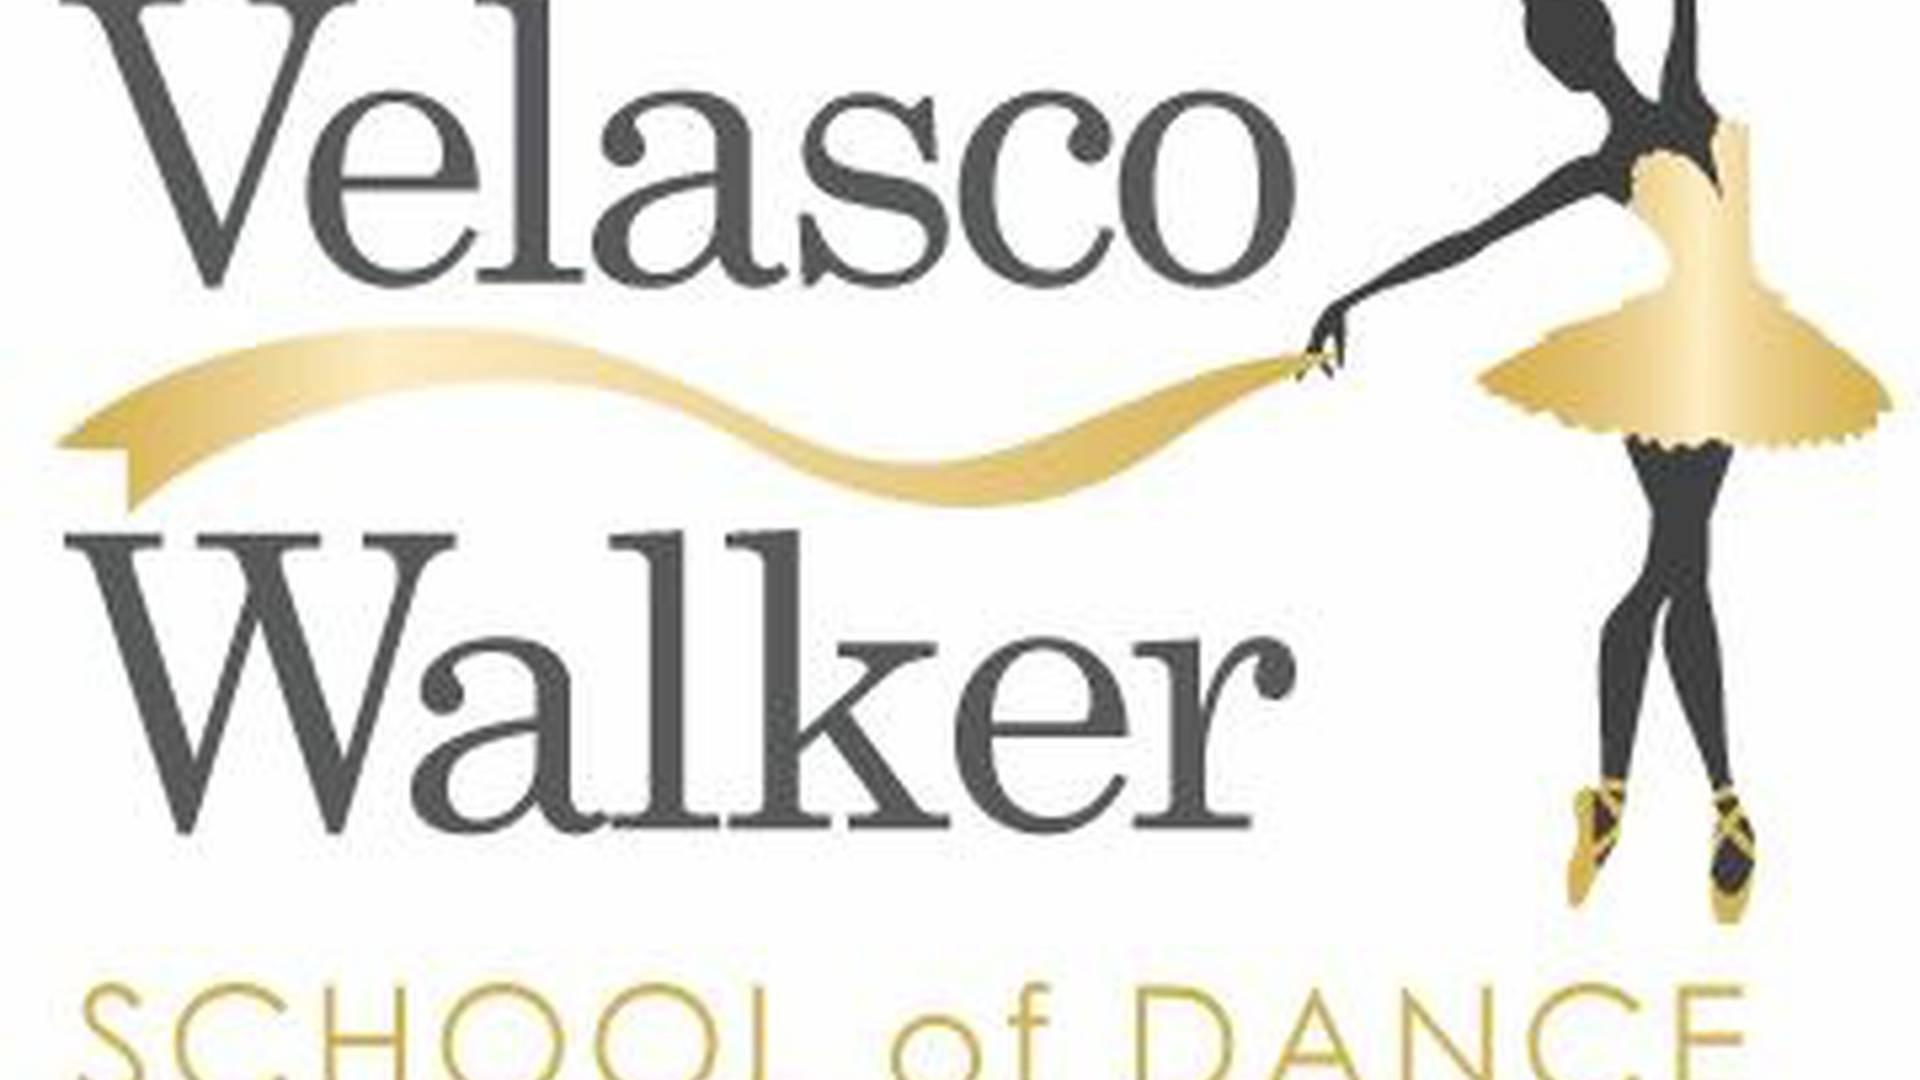 Velasco Walker School of Dance photo